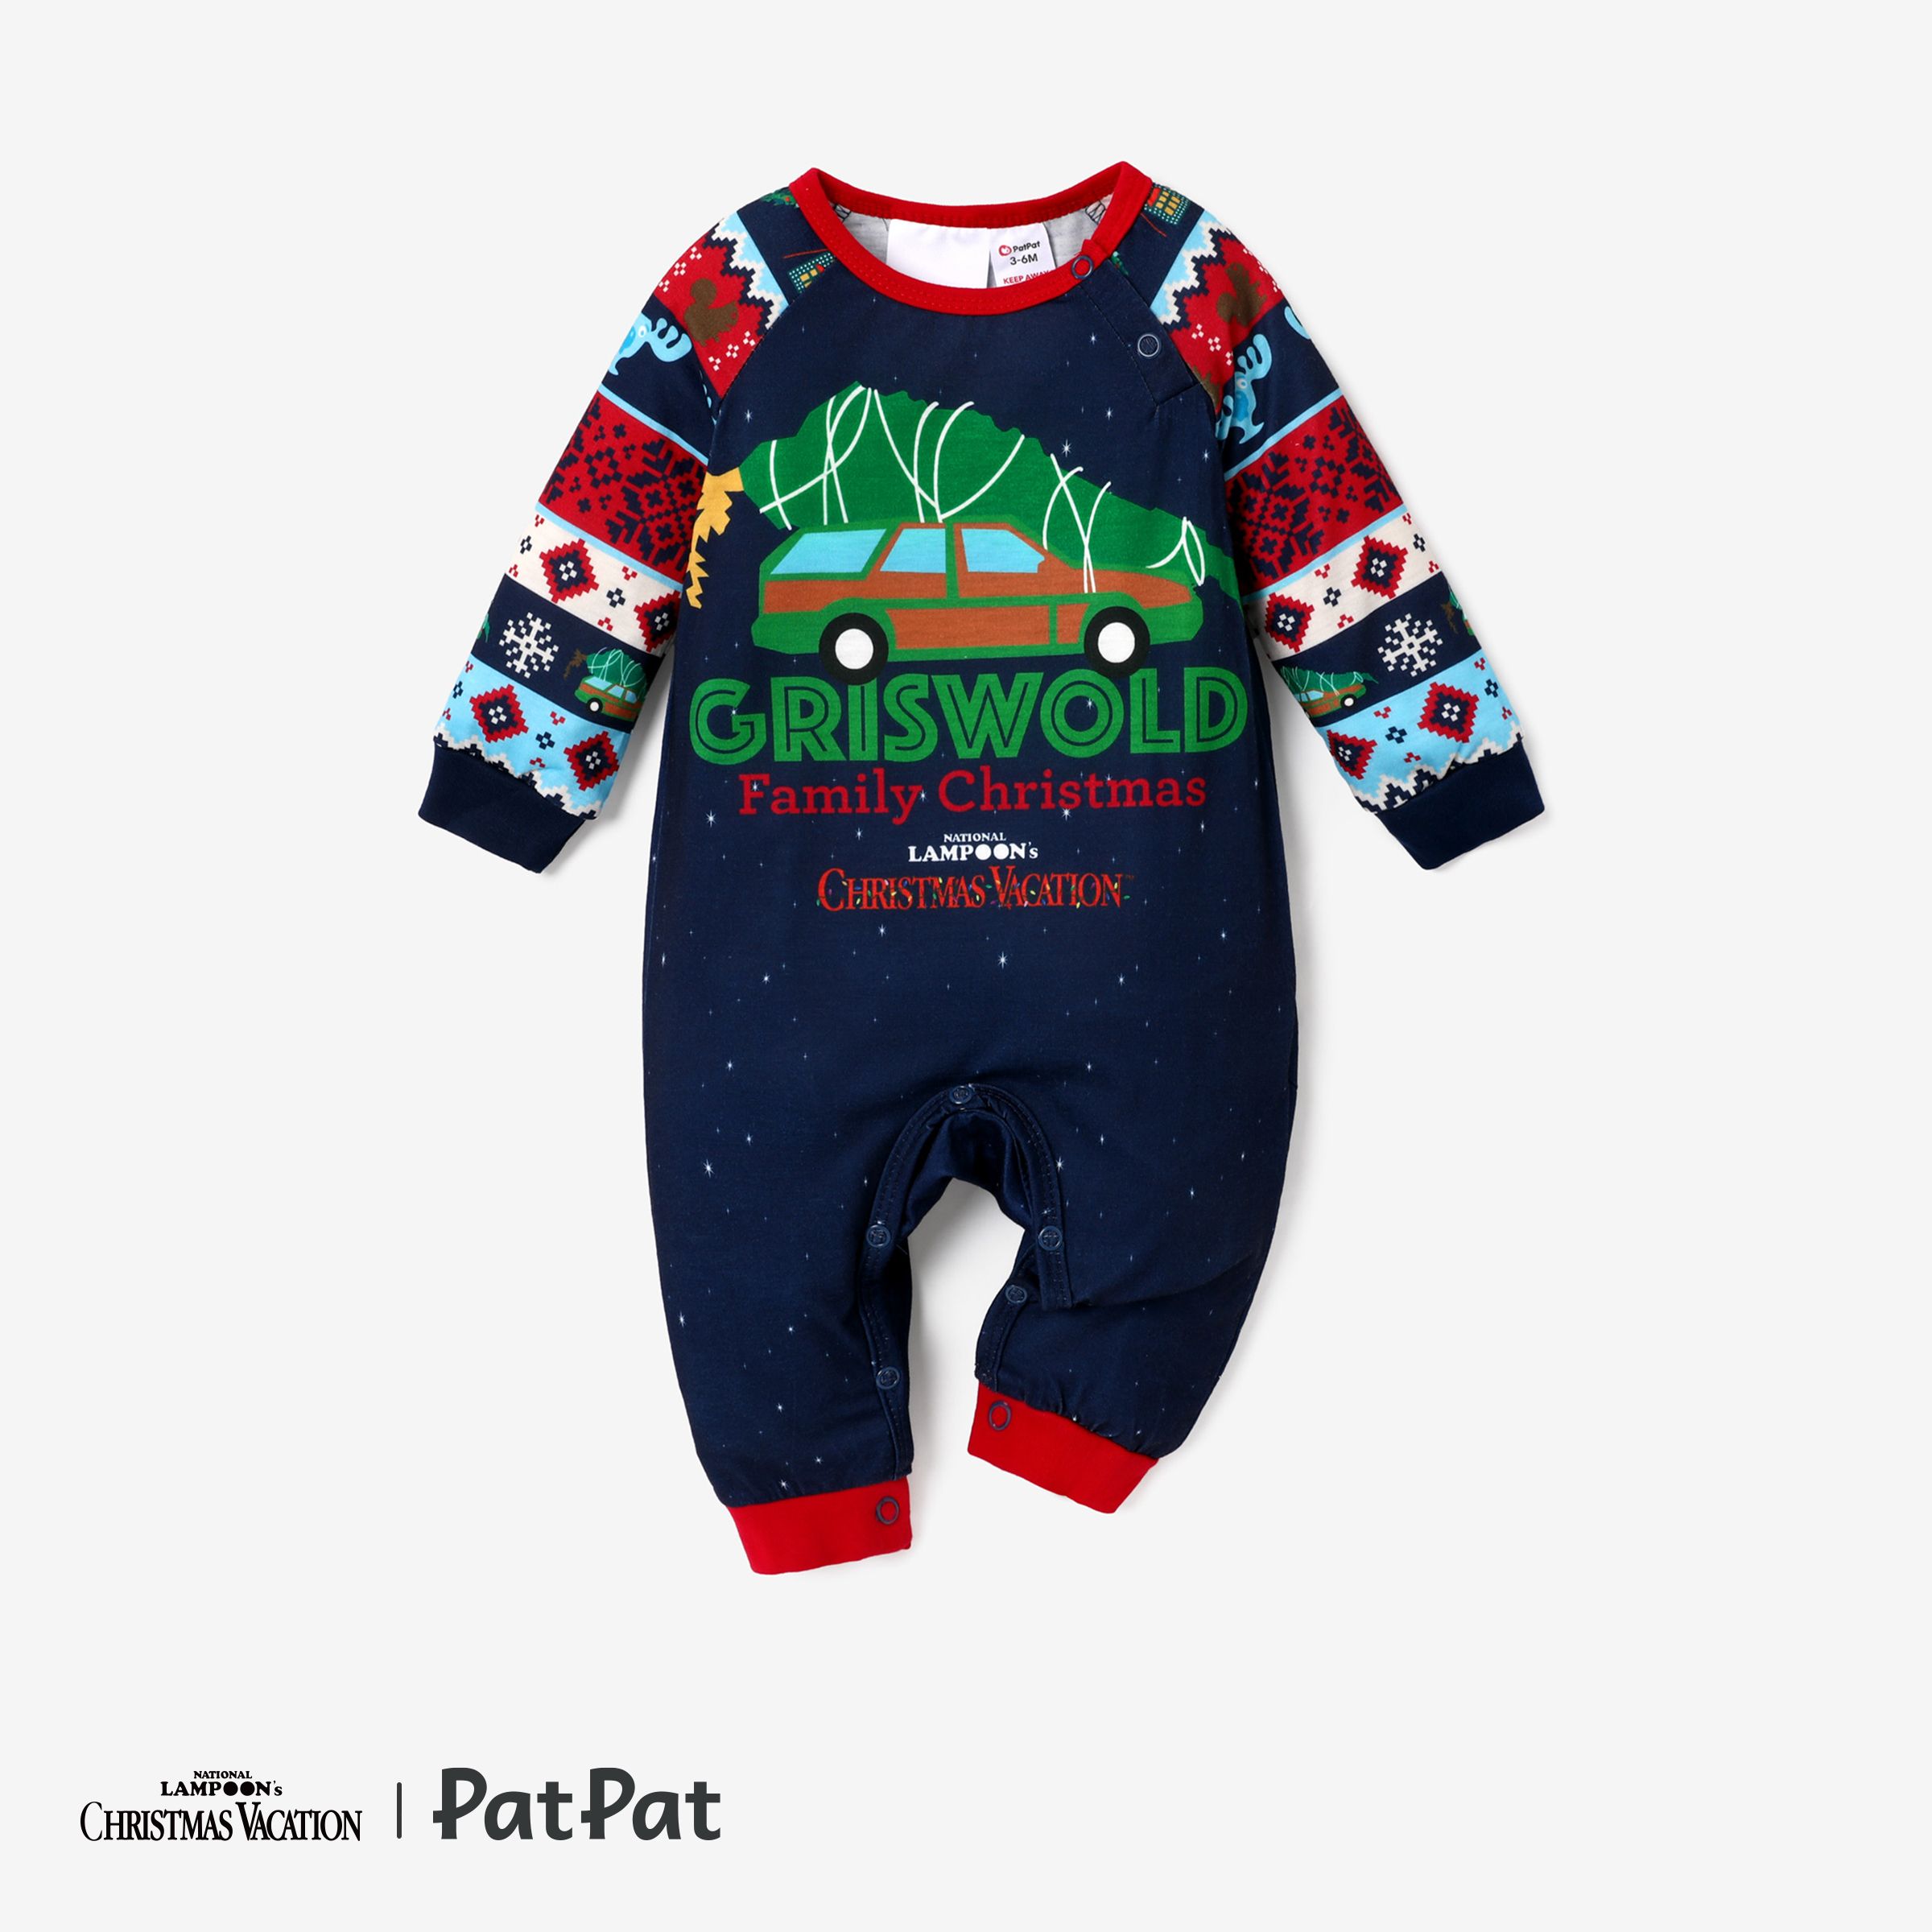 Christmas Vacation Family Matching Character Print Top and Pants Pajamas Sets(Flame Resistant)